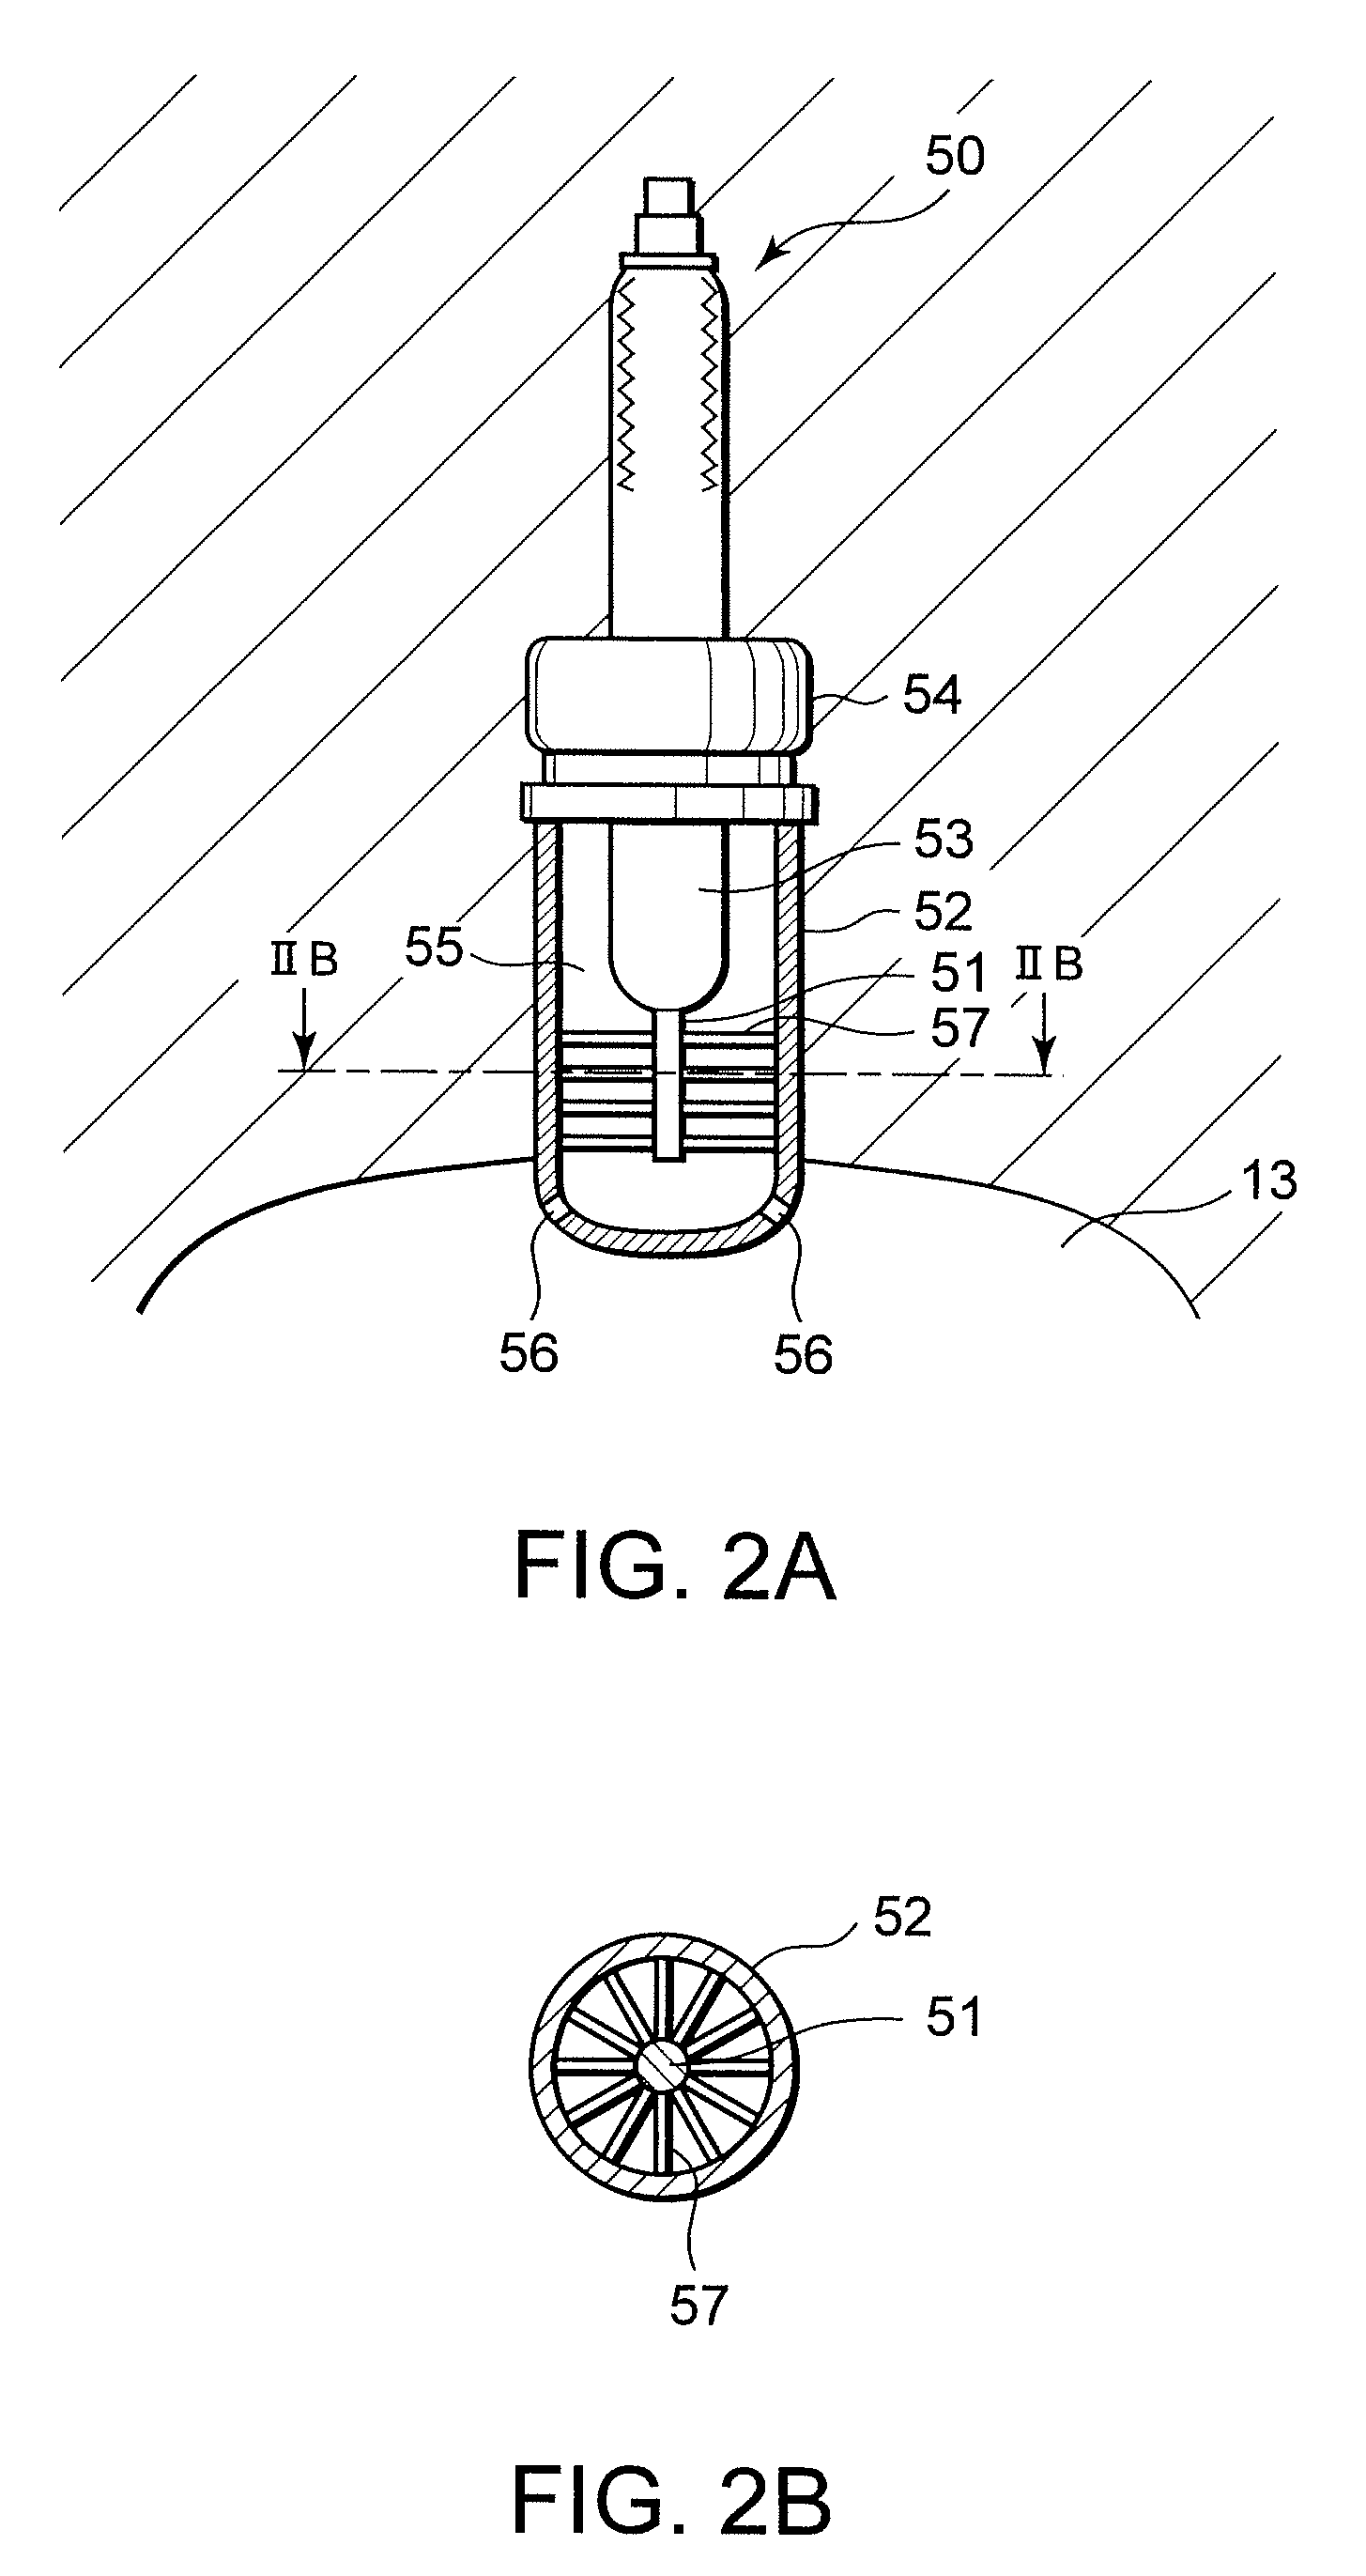 Non-equilibrium plasma discharge type ignition device